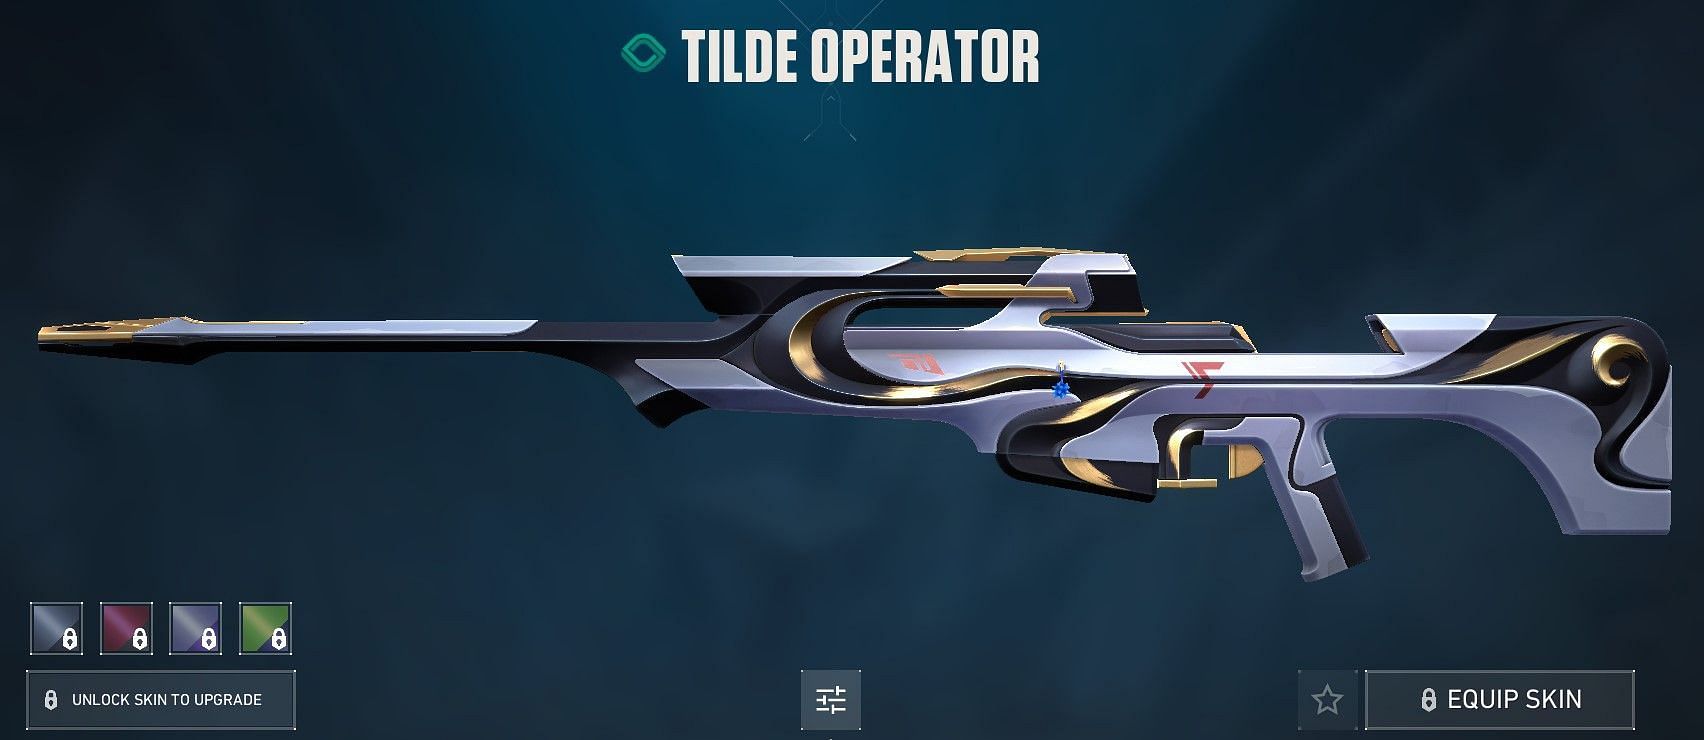 Tilde Operator (Image via Riot Games)